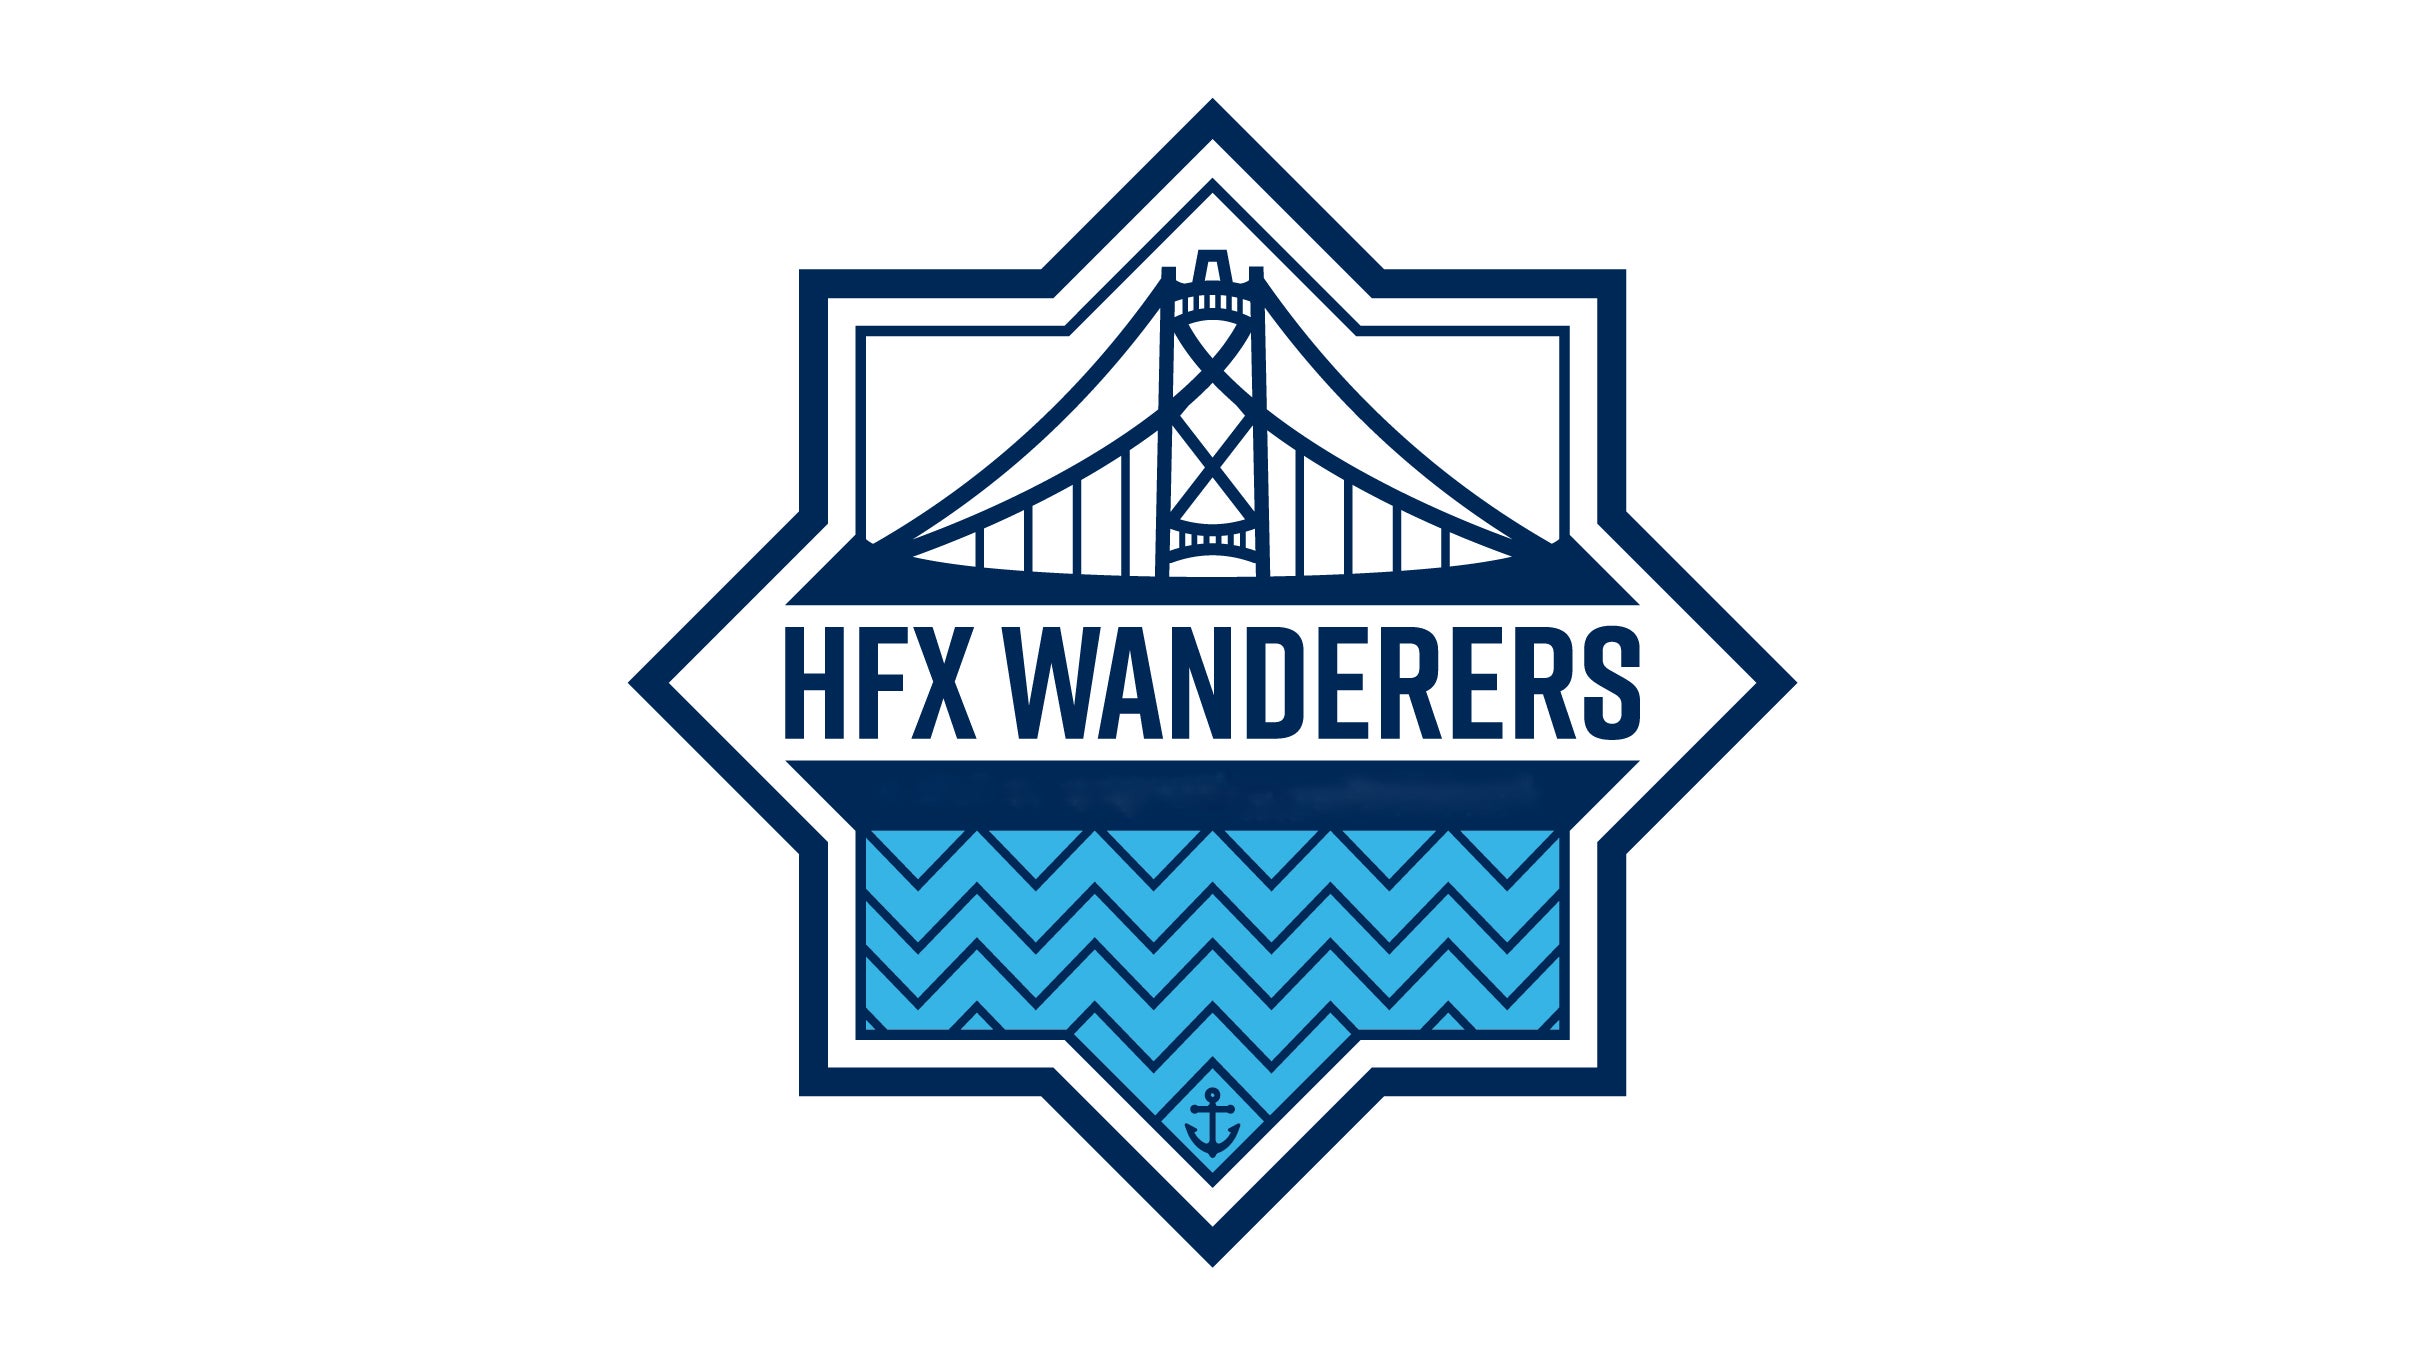 HFX Wanderers FC vs. Pacific FC in Halifax promo photo for Westjet Rewards presale offer code